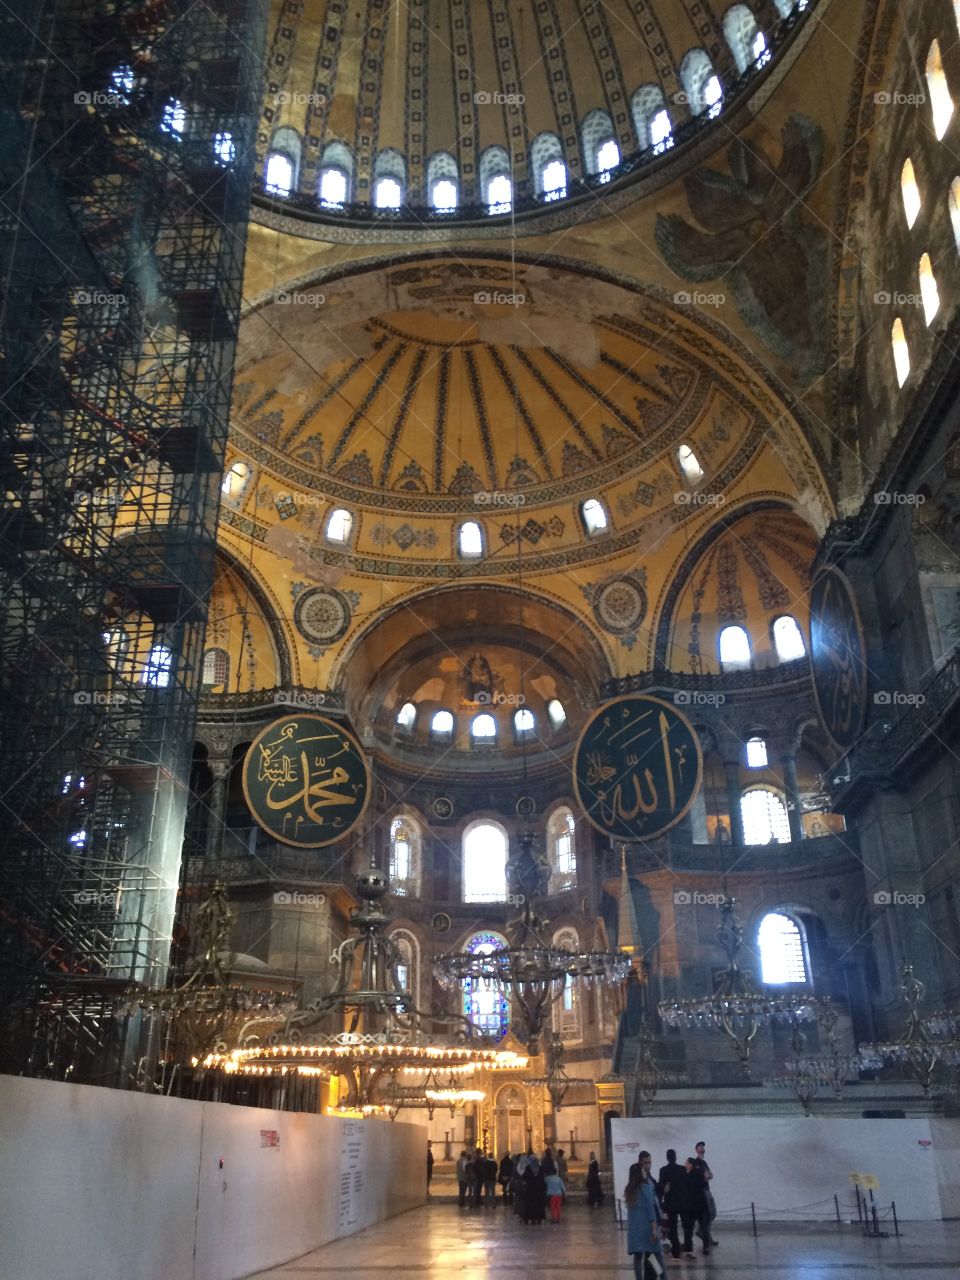 Ayasofya Istanbul / Hagia Sophia